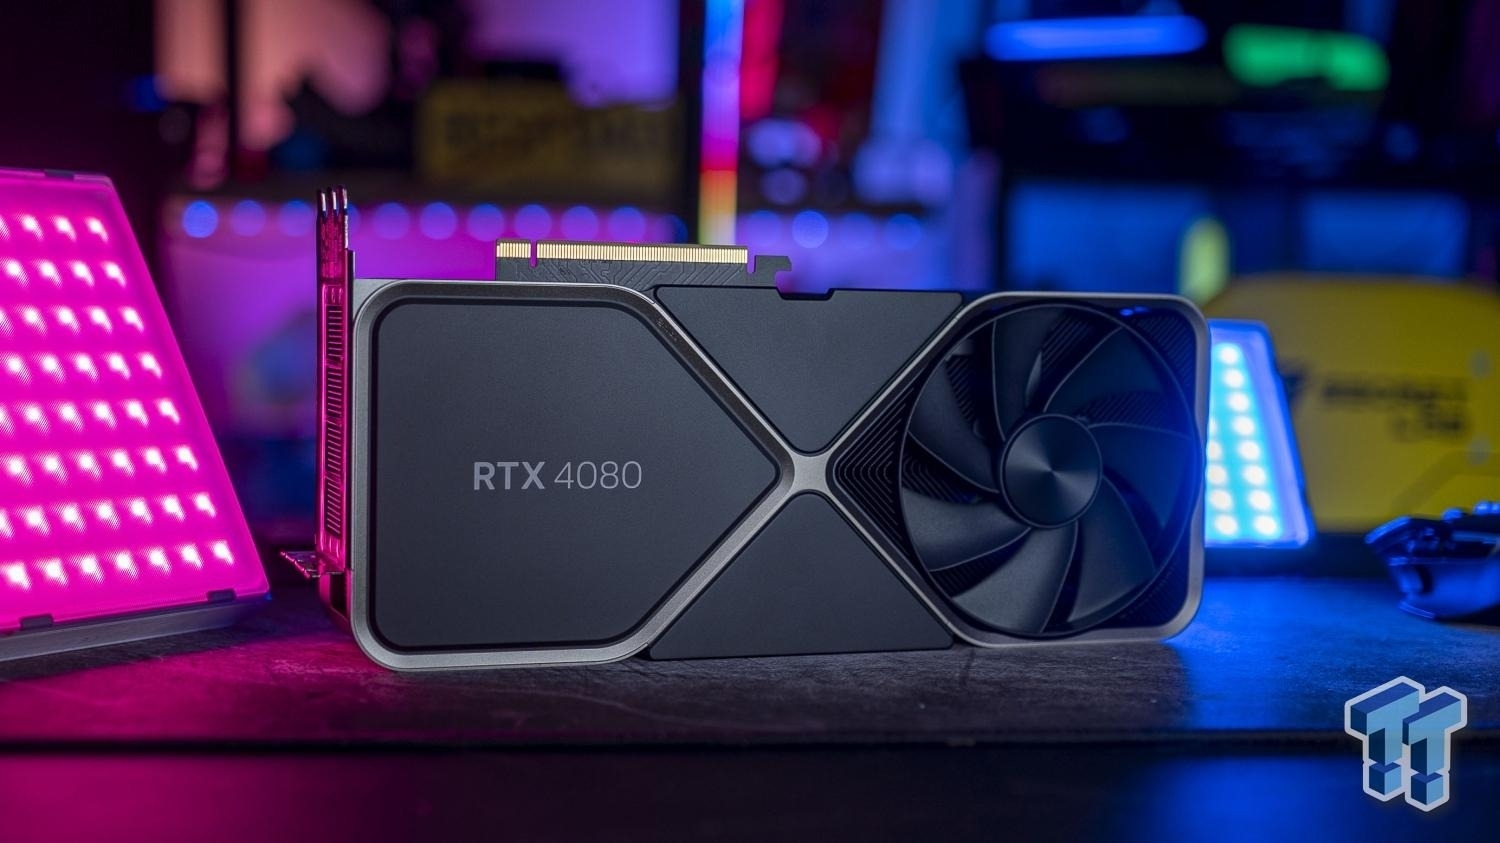 Nvidia RTX 4080 Super: Rumored specs, price & more - Dexerto